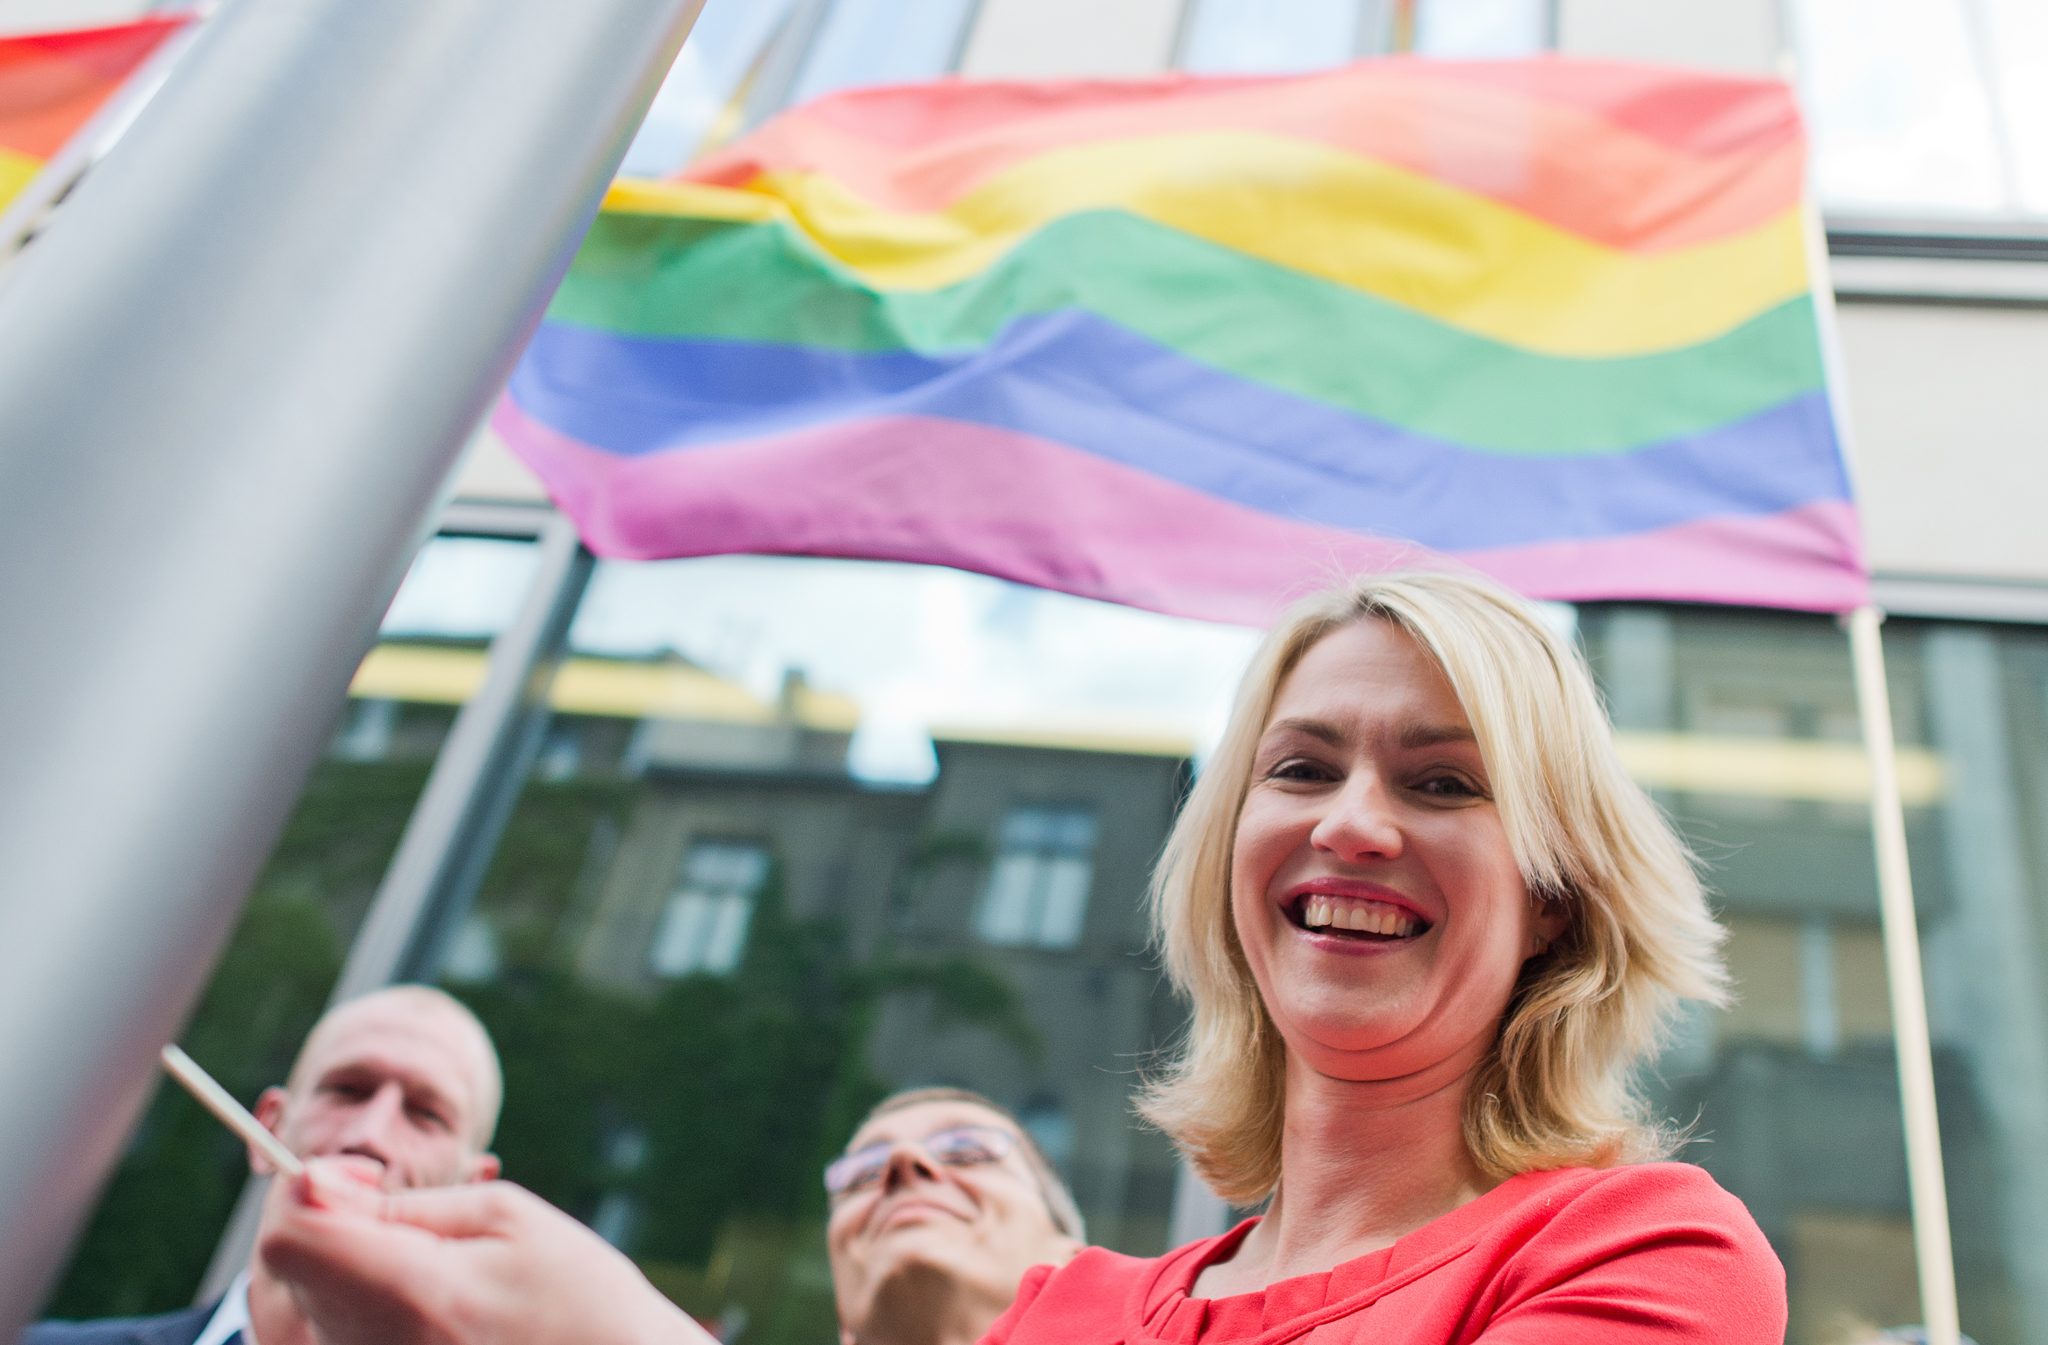 Die damalige Bundesfamilienministerin Manuela Schwesig (SPD) hißt die Regenbogenflagge vor ihrem Amtssitz (Archivbild) Foto: (c) dpa